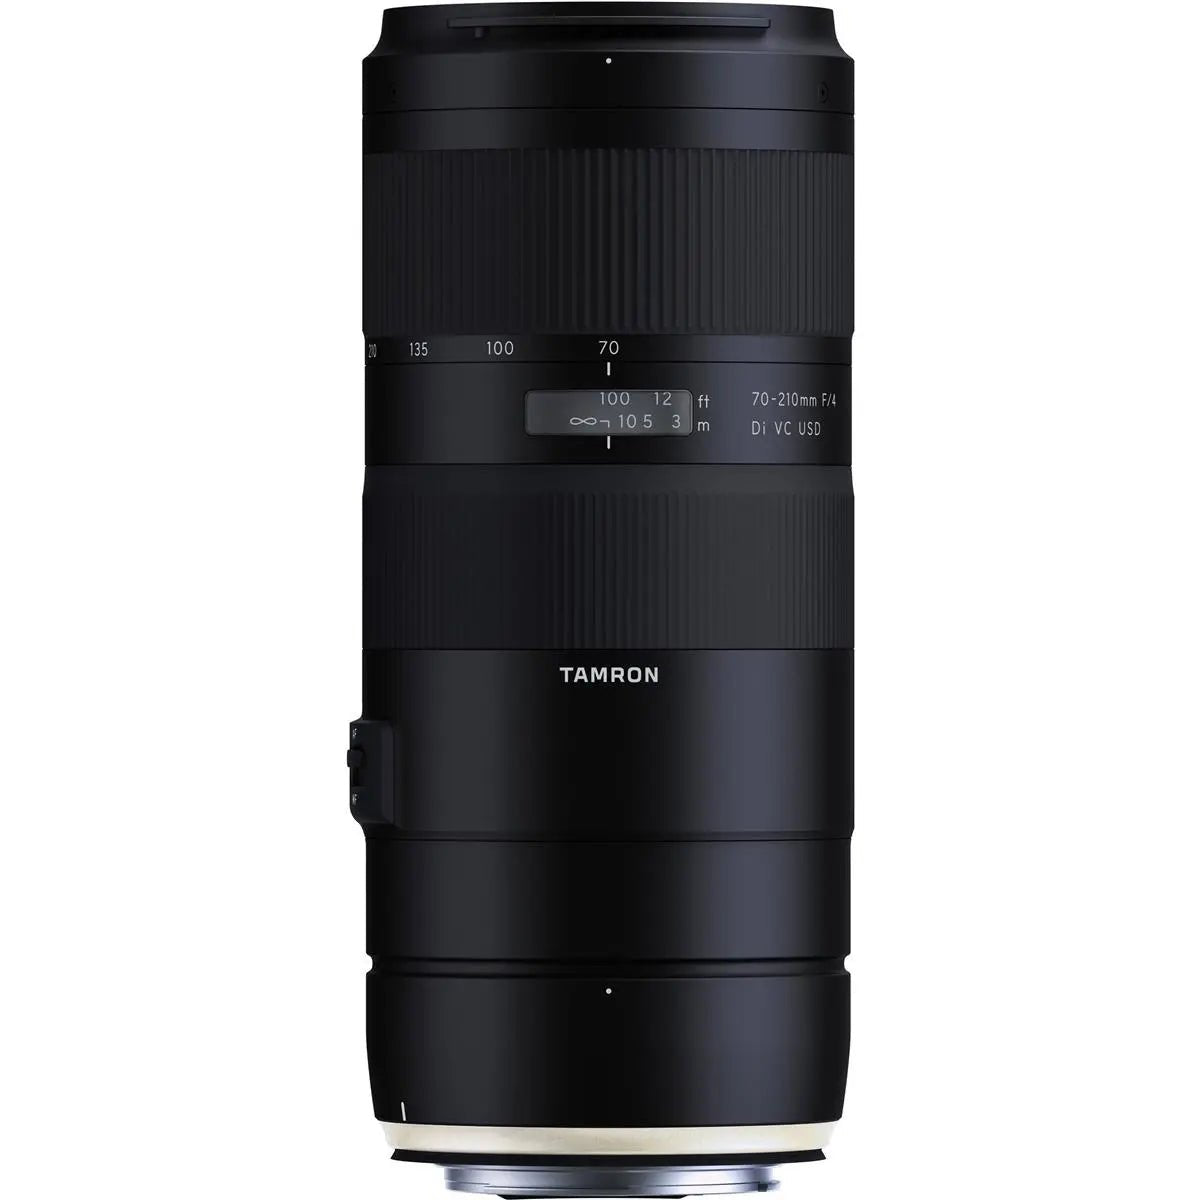 Tamron 70-210mm f/4 Di VC USD Lens for Canon